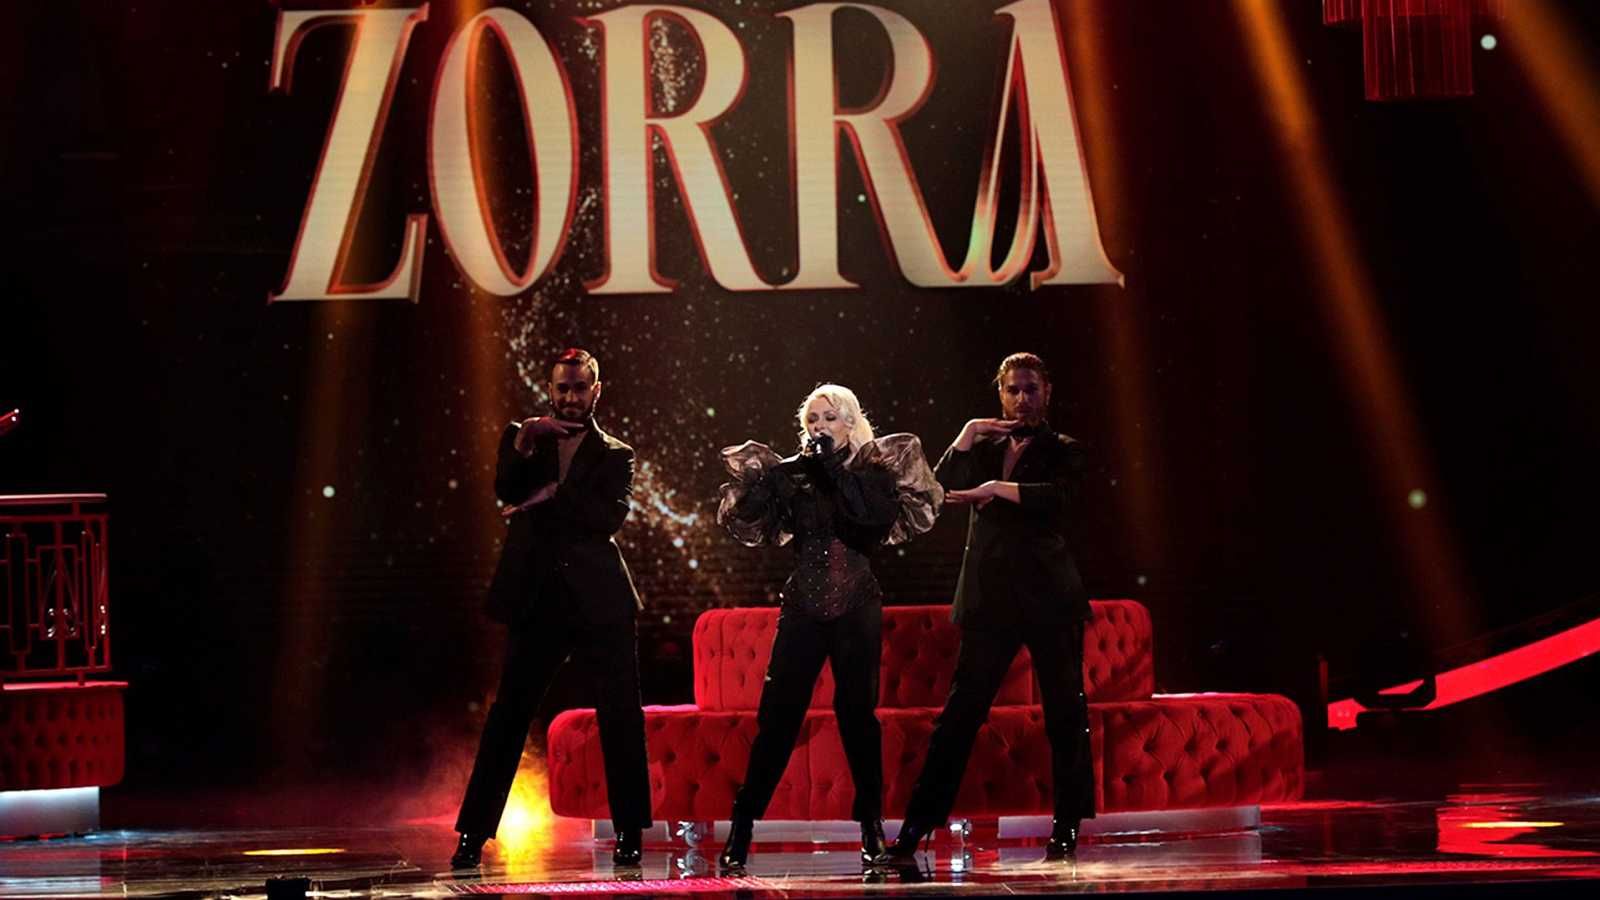 ZORRA BENIDORM FEST  Eurovisión no quiere 'zorras': ¿tendría